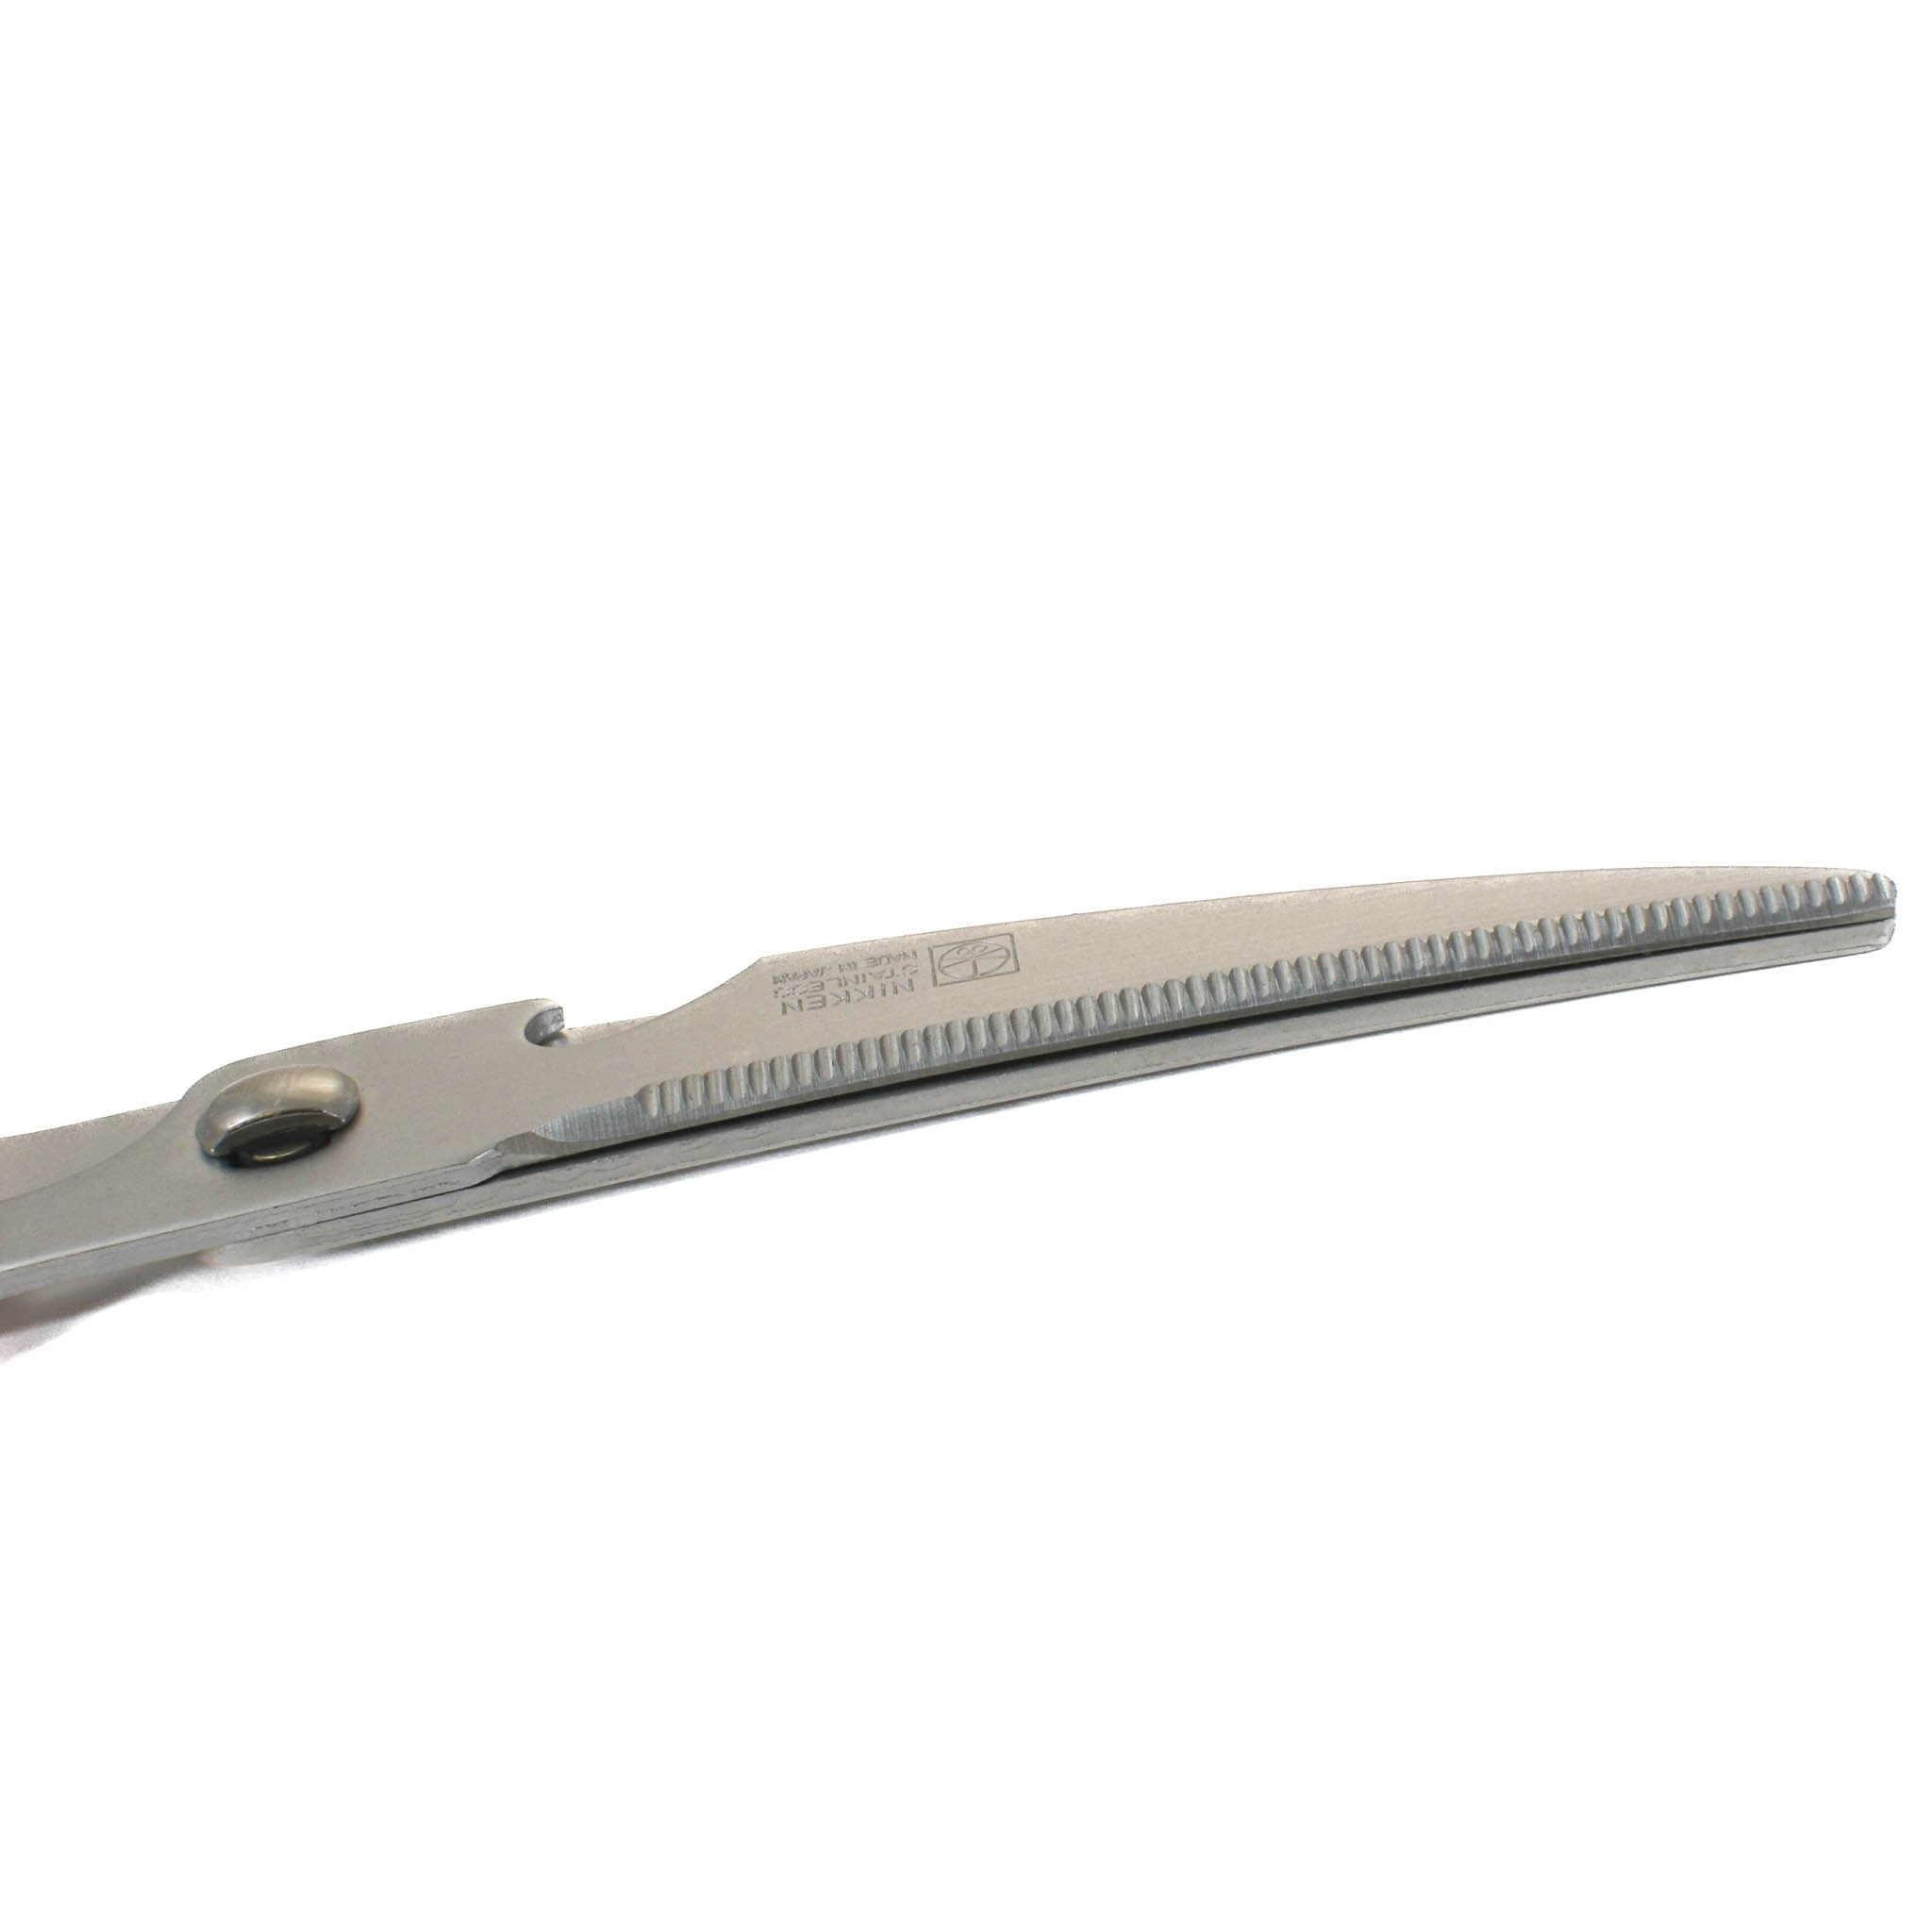 Japanese Curved Blade Fluorine Coated Scissors, Detachable